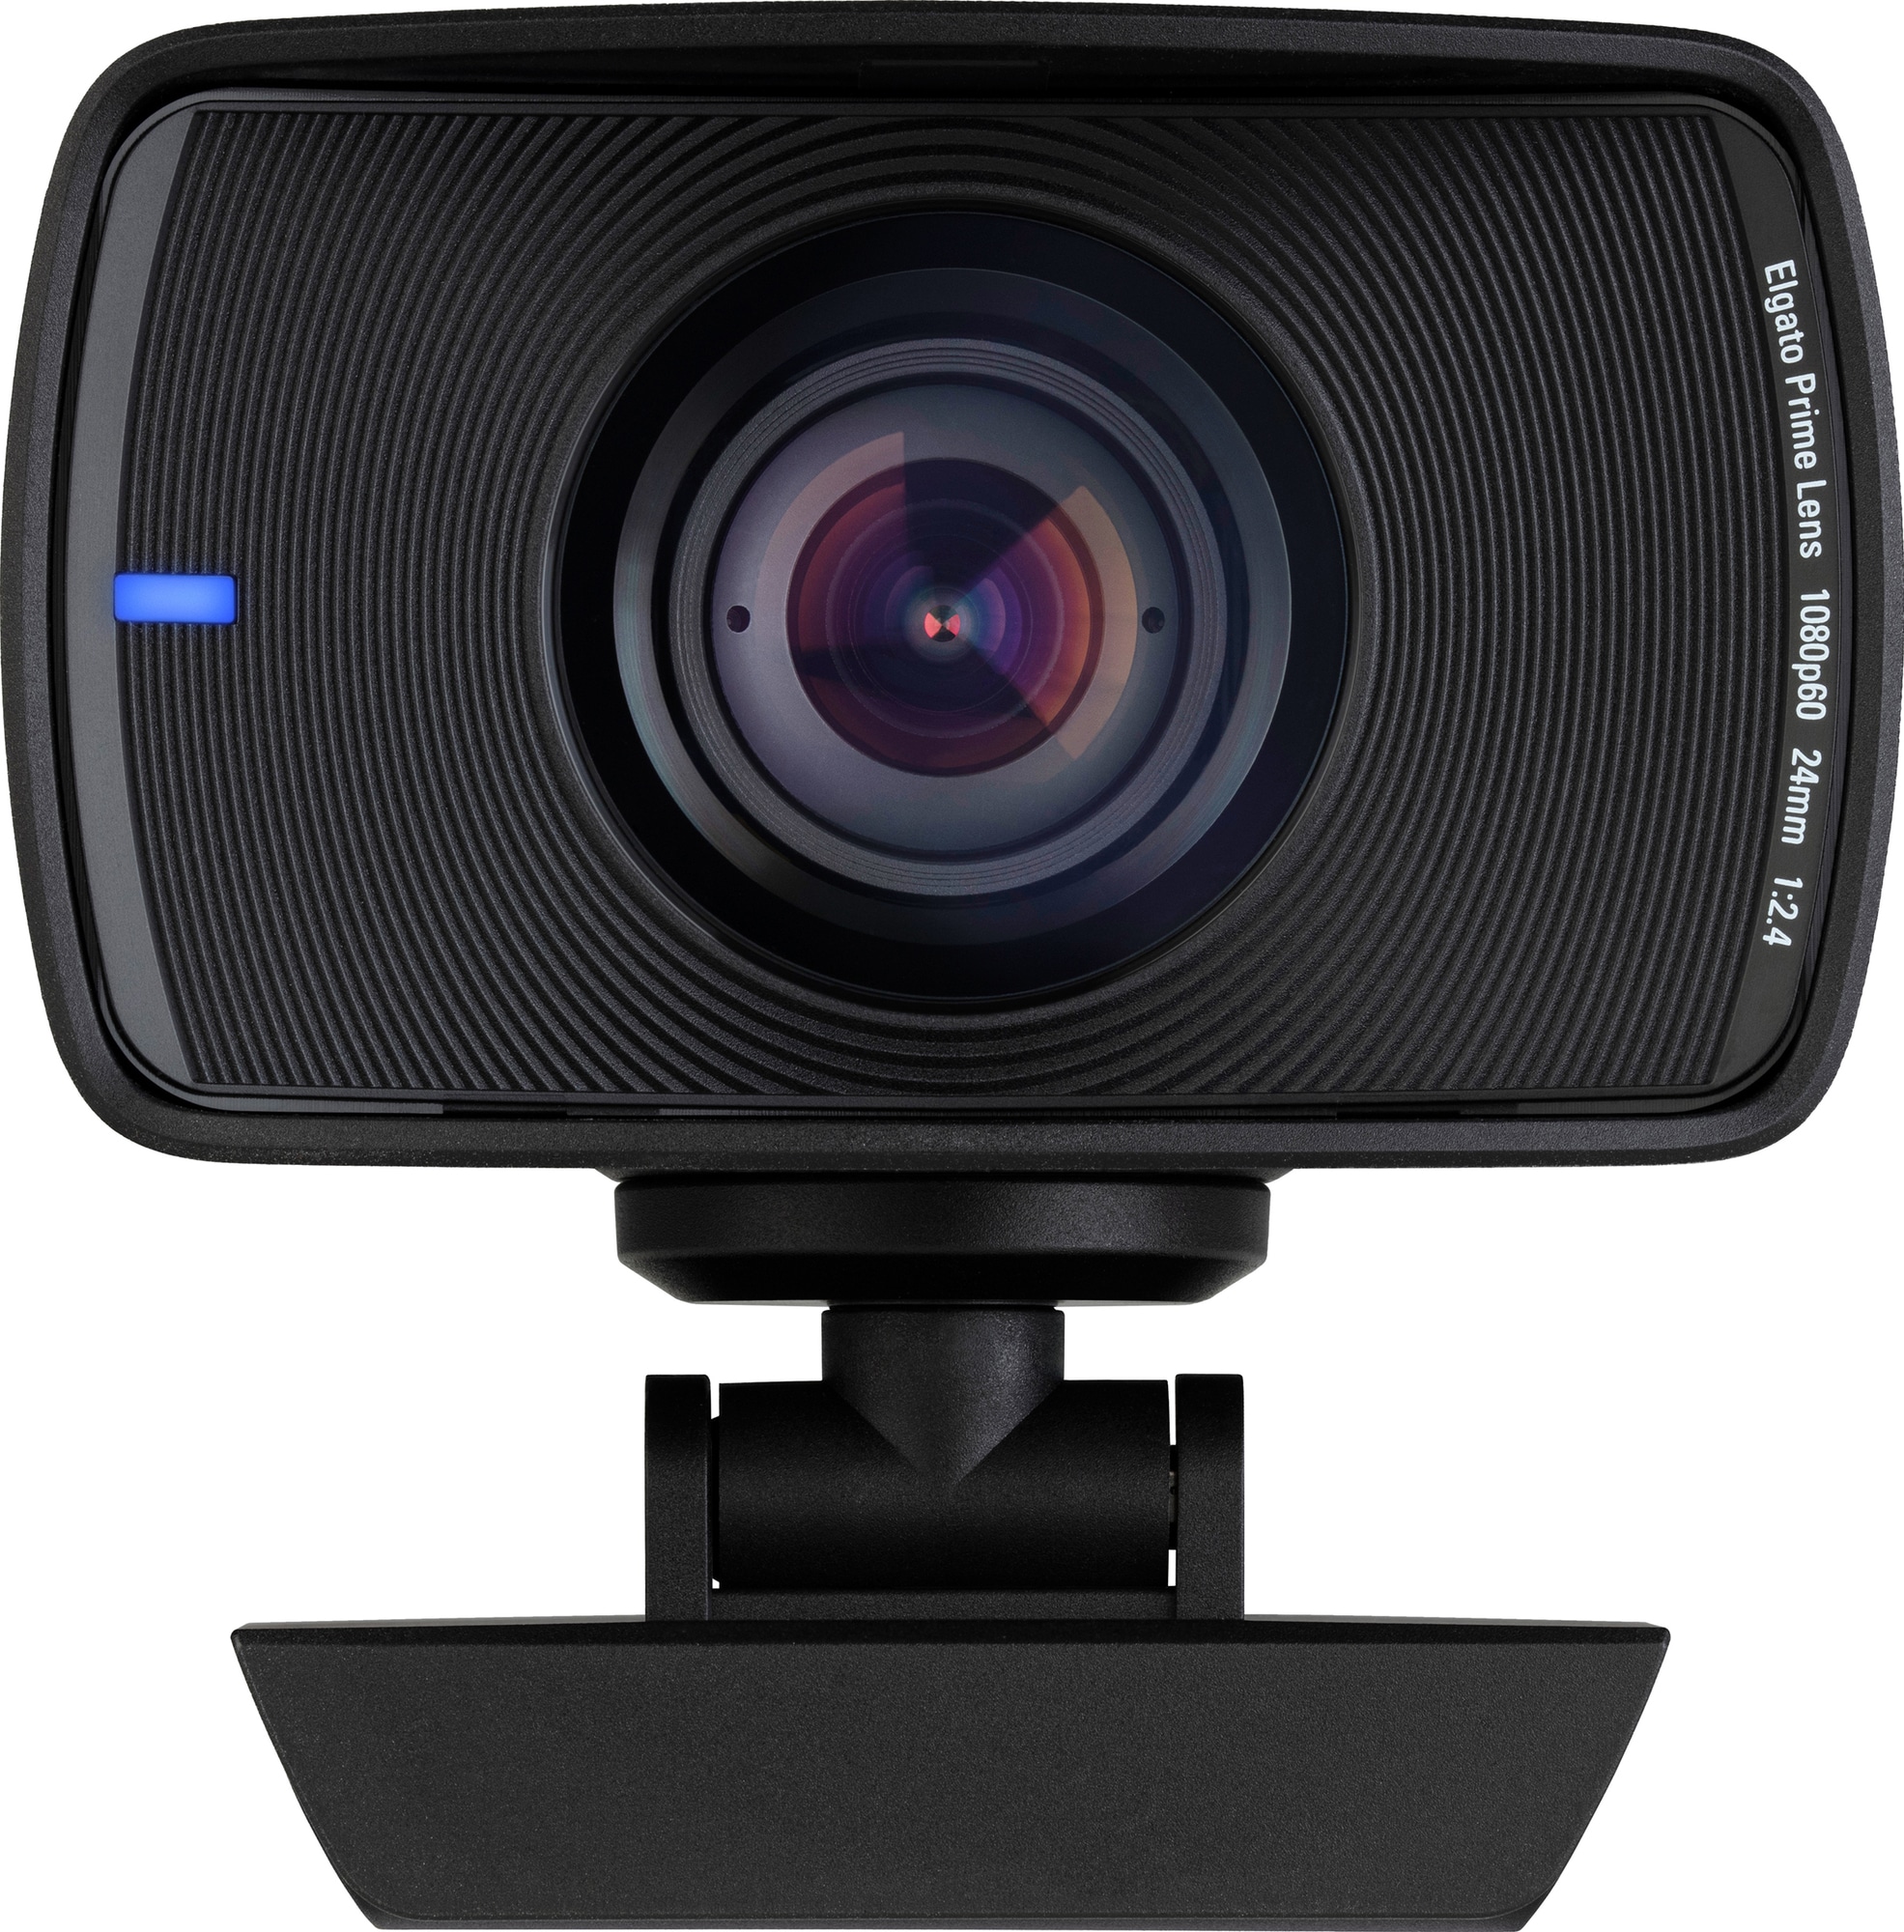 Elgato Facecam Full HD webkamera - Gigantti verkkokauppa